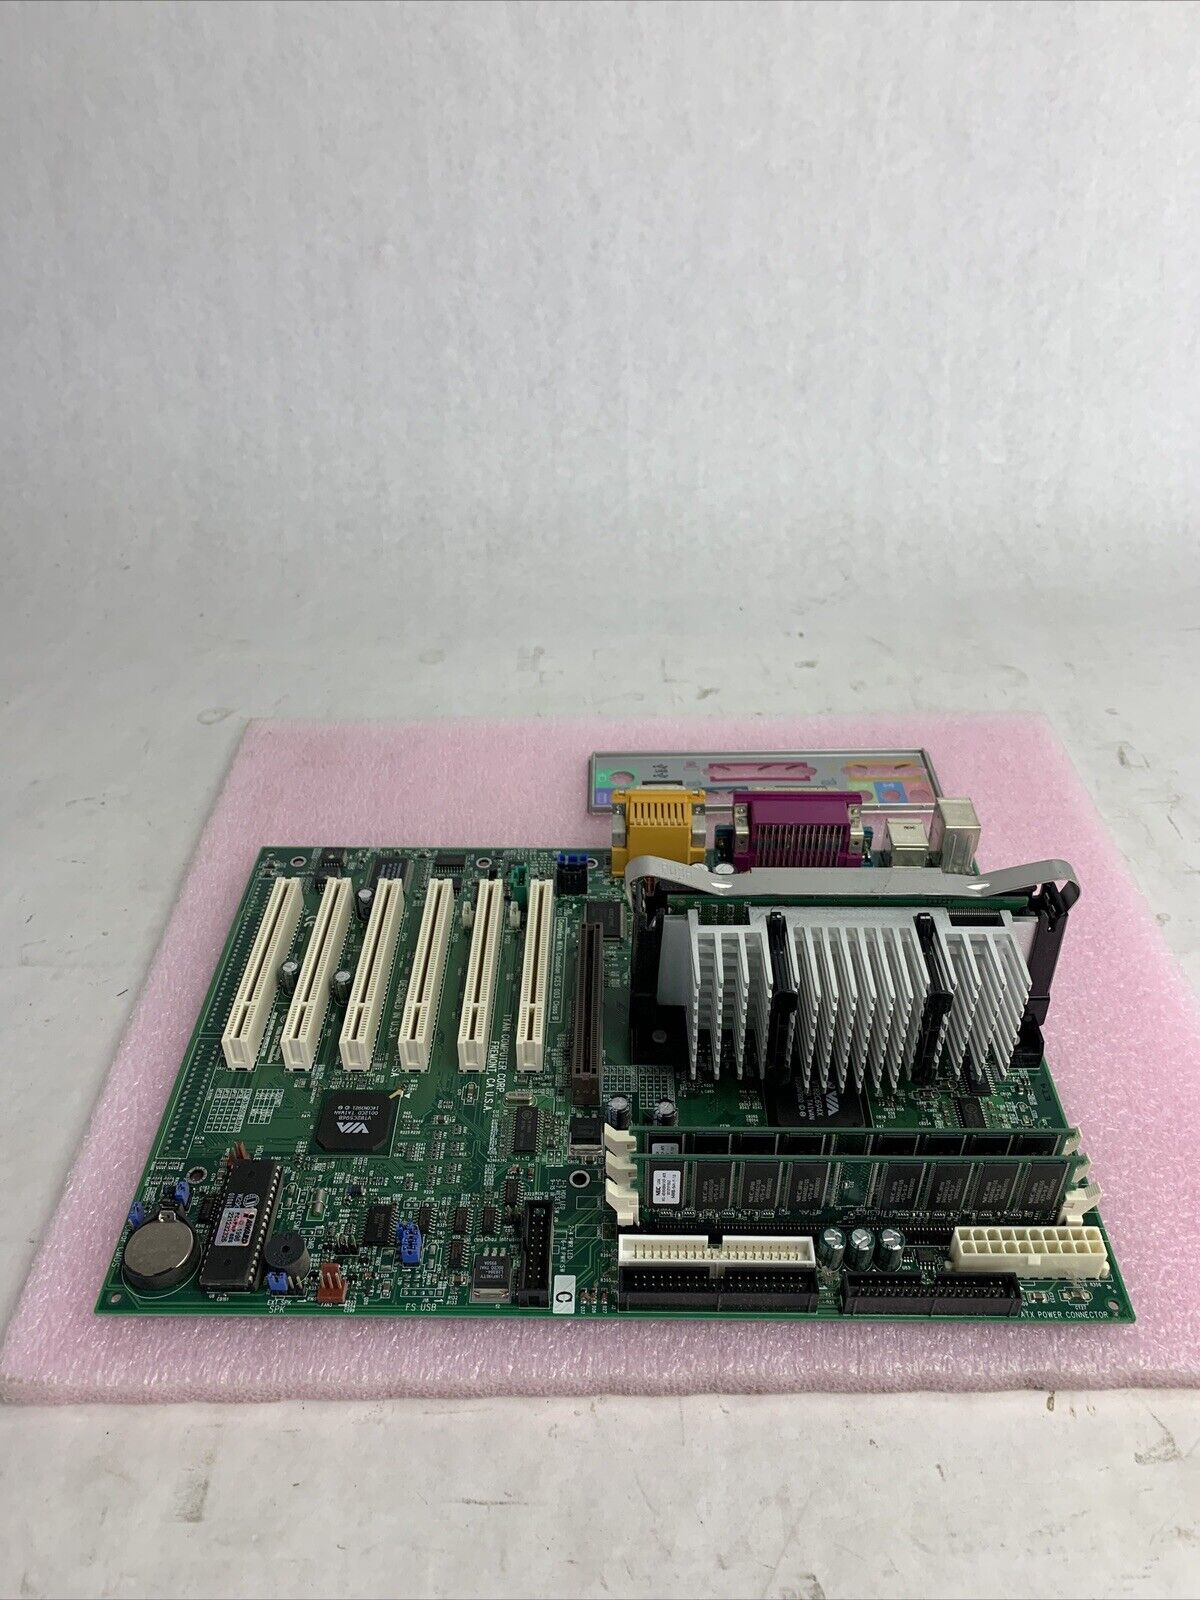 Tyan S1854 Motherboard Intel Pentium III 533MHz 128MB RAM w/ I/O Shield